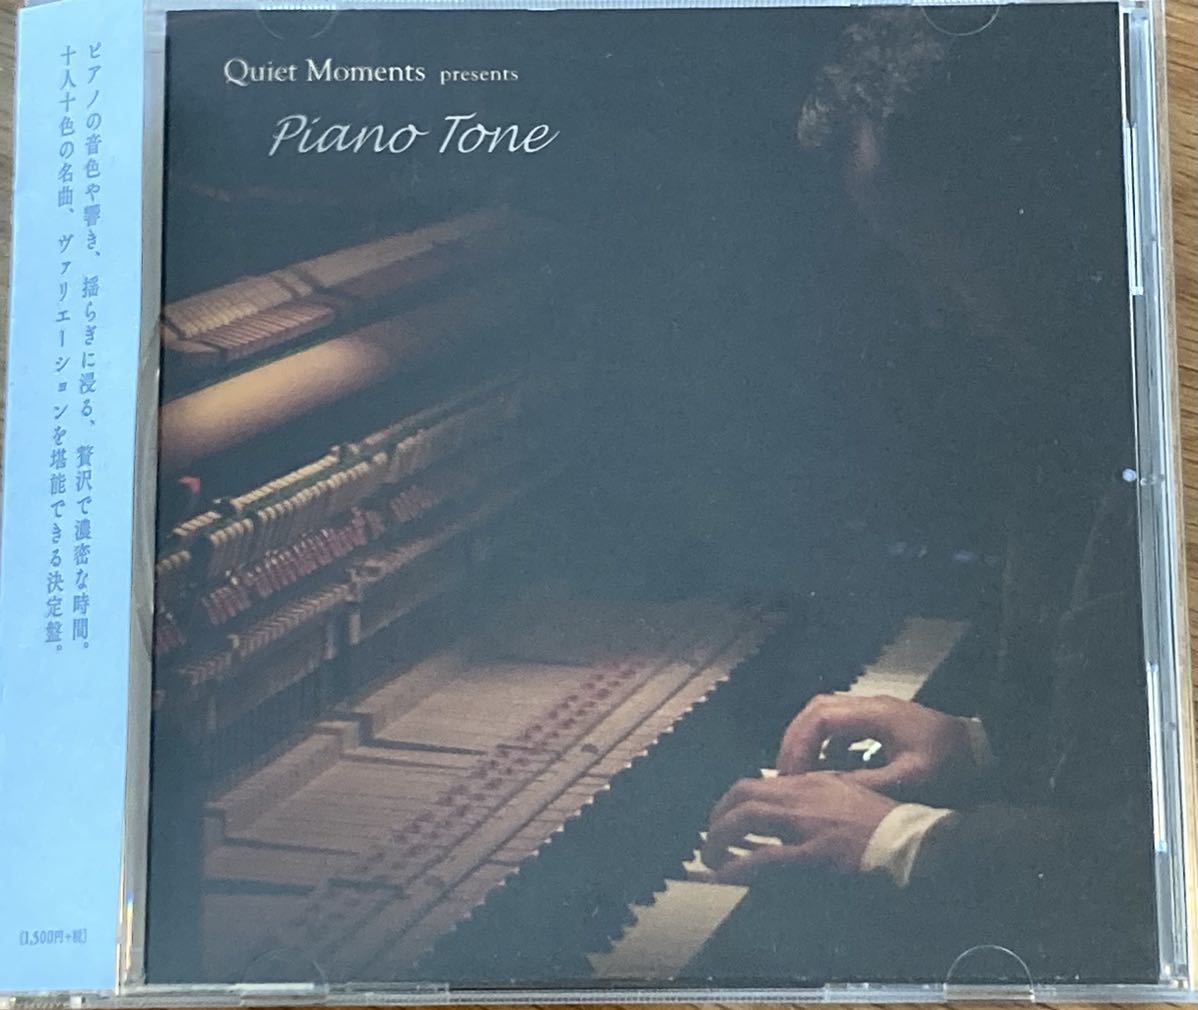 Quiet Moments Piano Tone / средний остров ручка yuki, haruka nakamura,.Fabrizio Paterlini